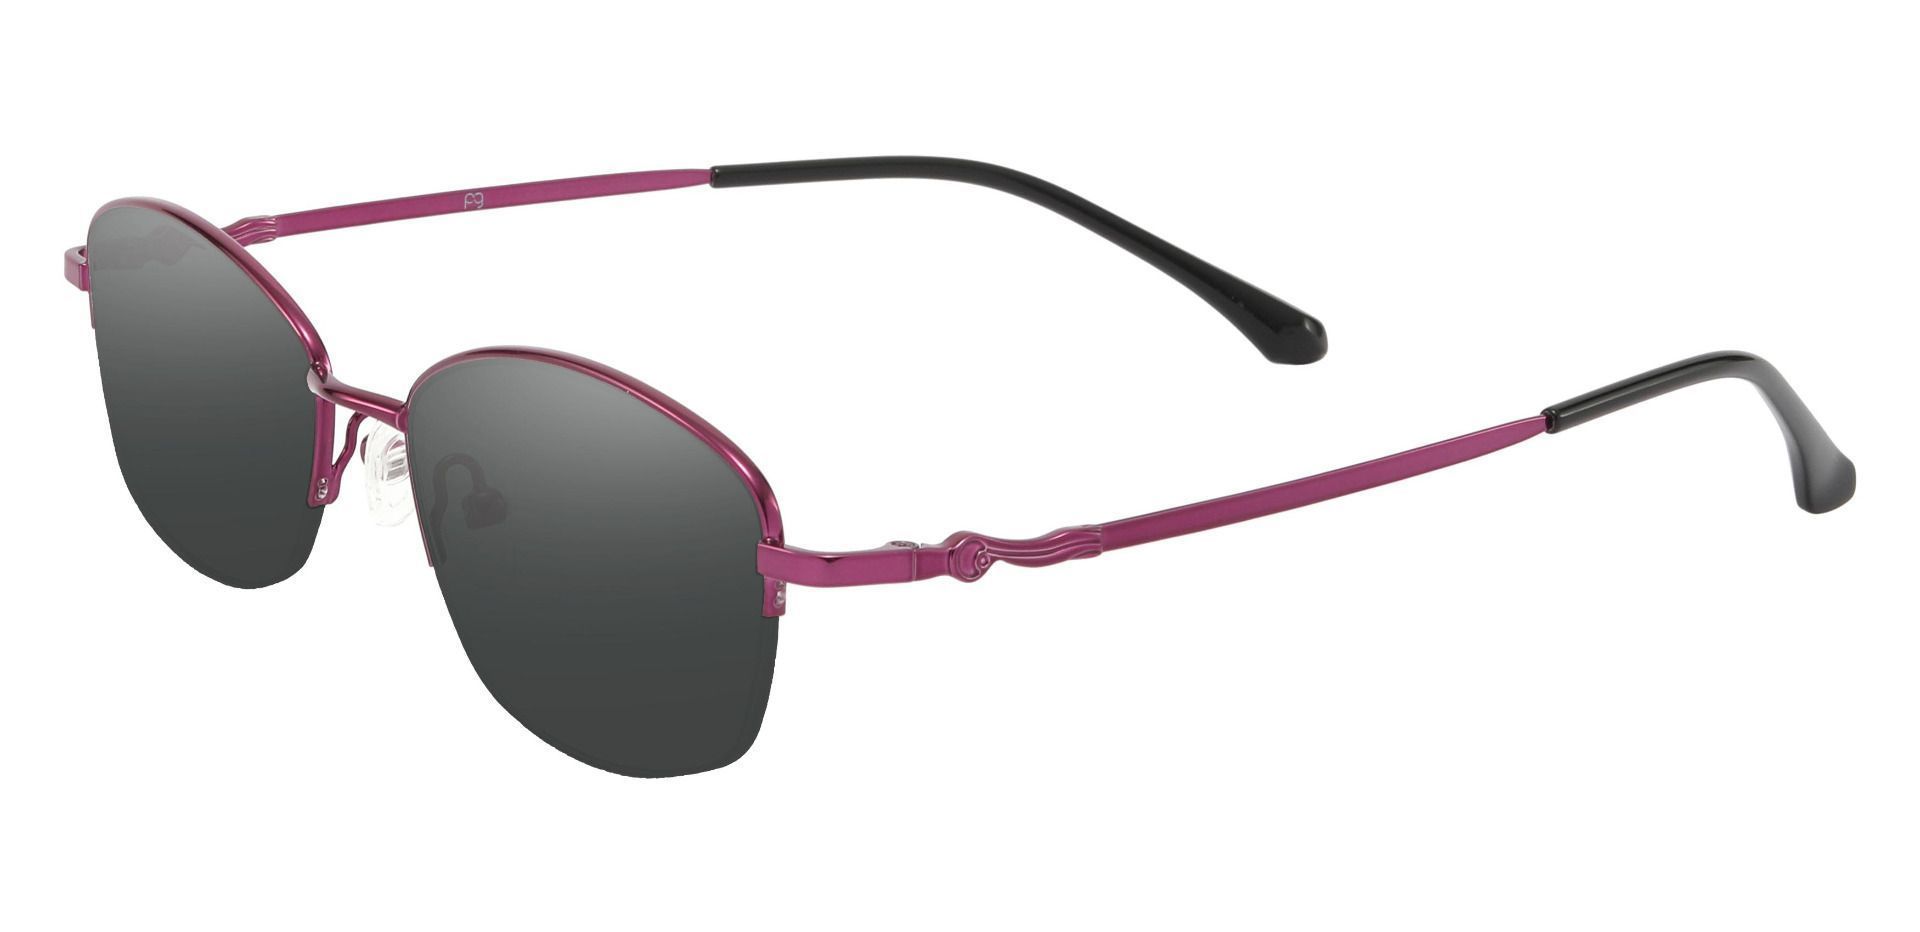 Beulah Oval Prescription Sunglasses - Purple Frame With Gray Lenses